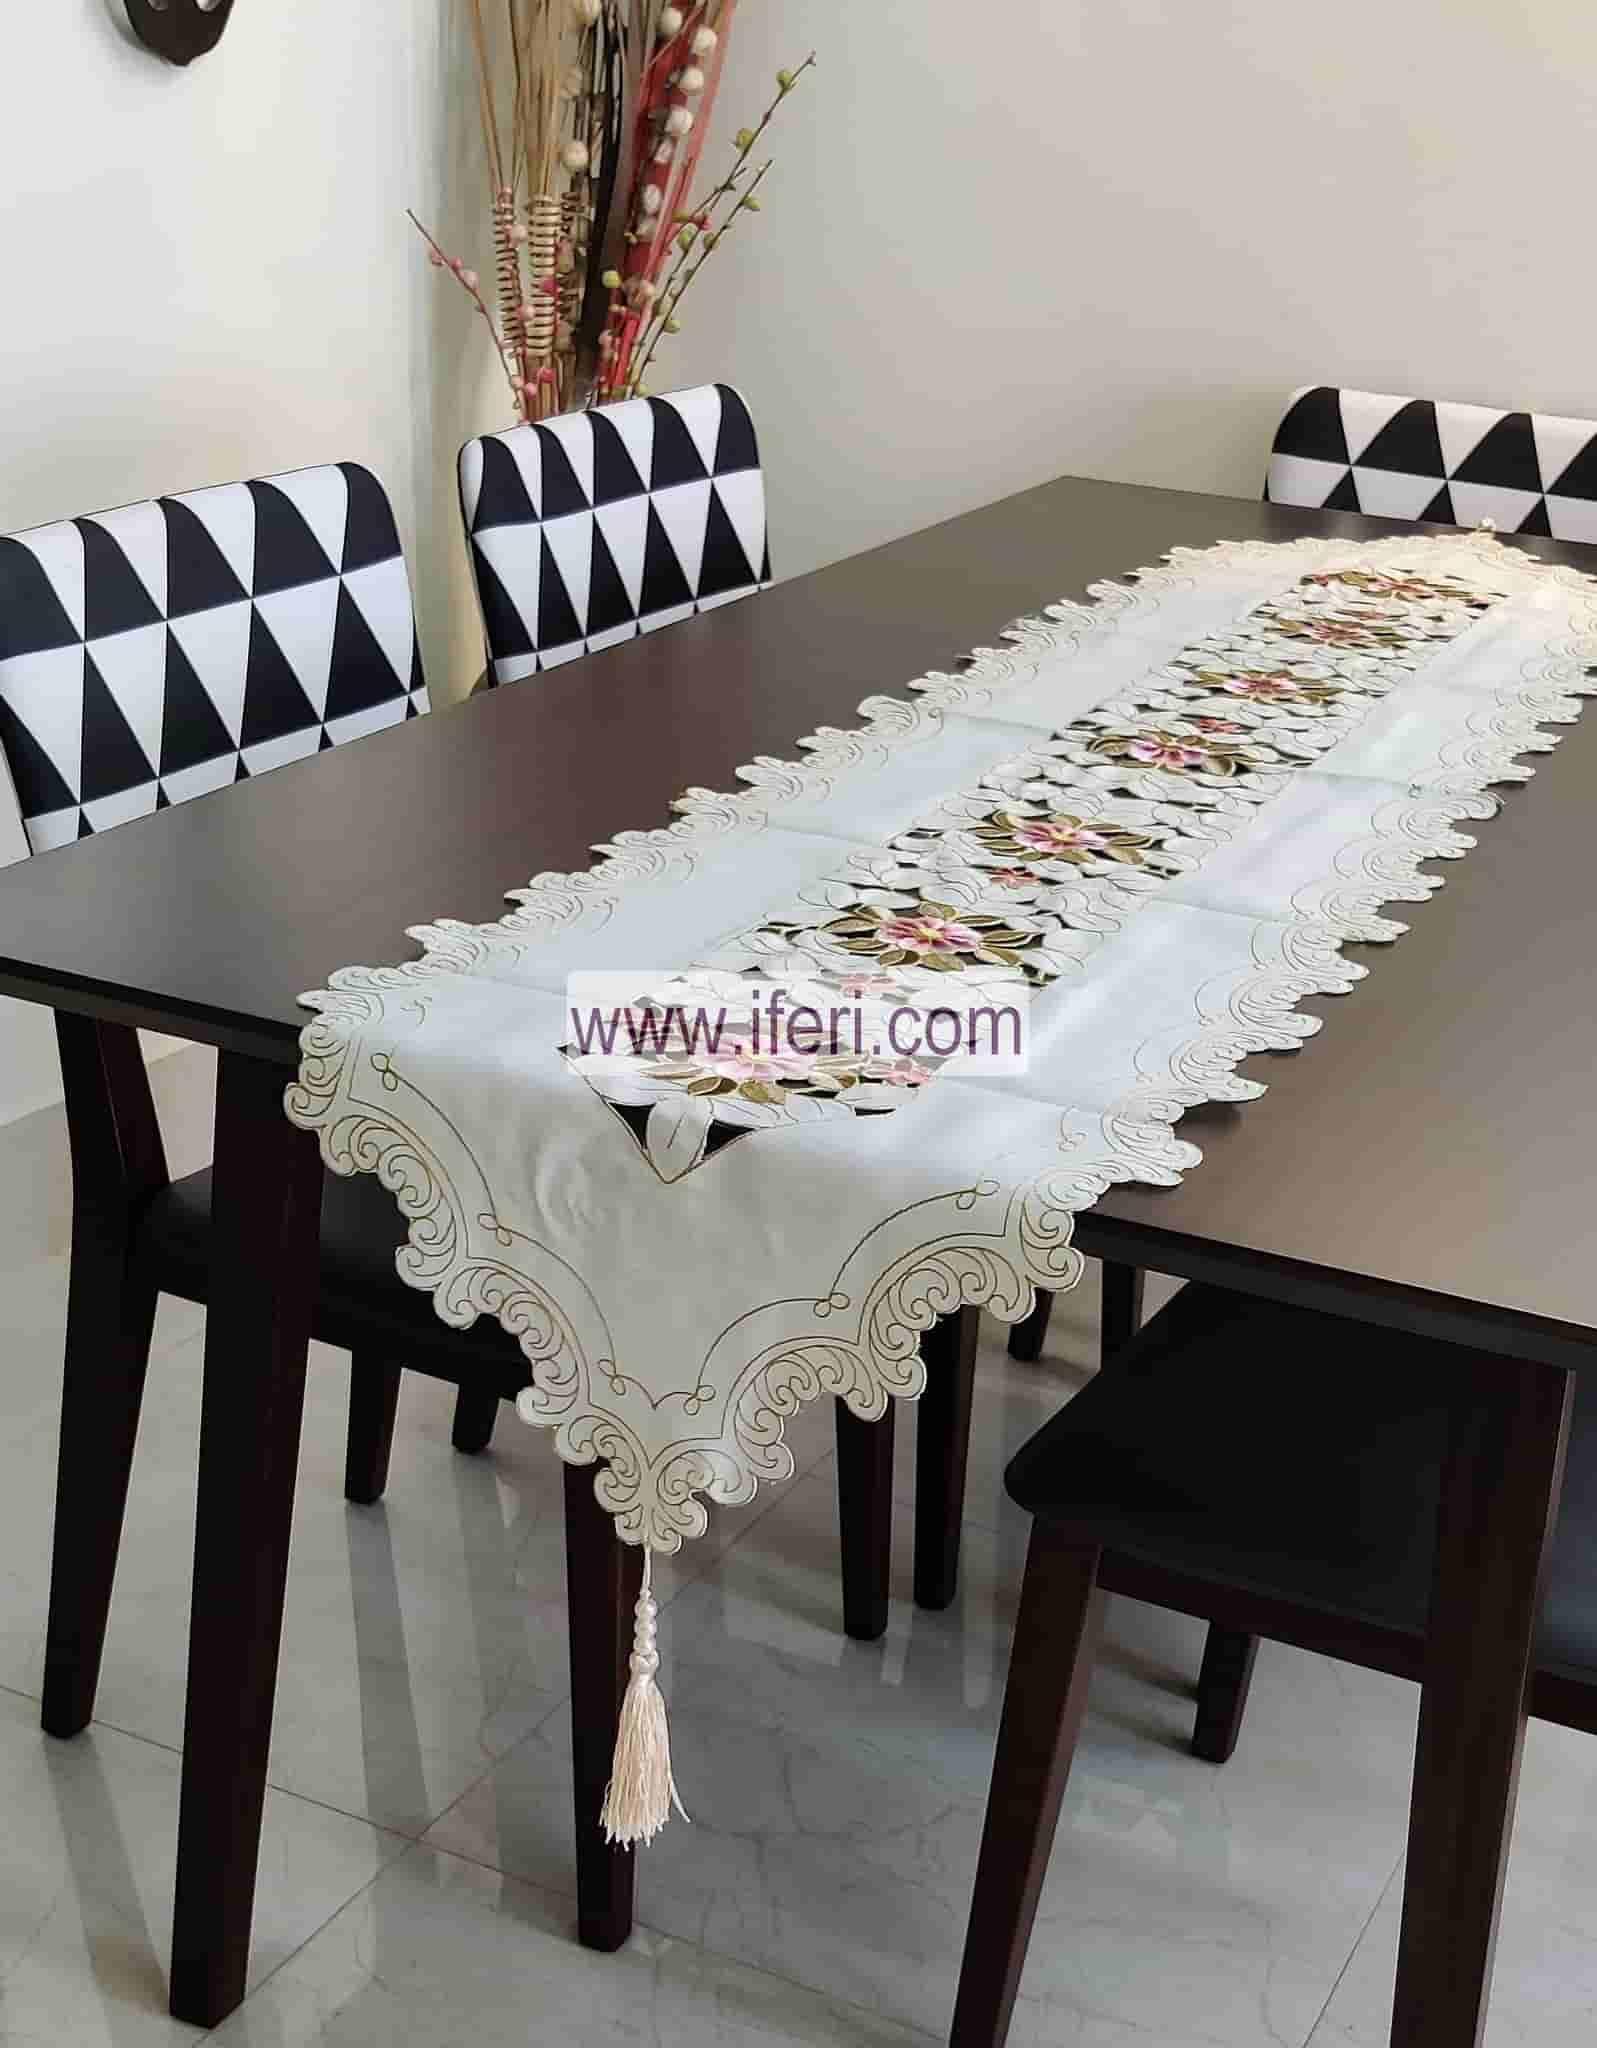 Exclusive Table Runner RJ0223 Price in Bangladesh - iferi.com